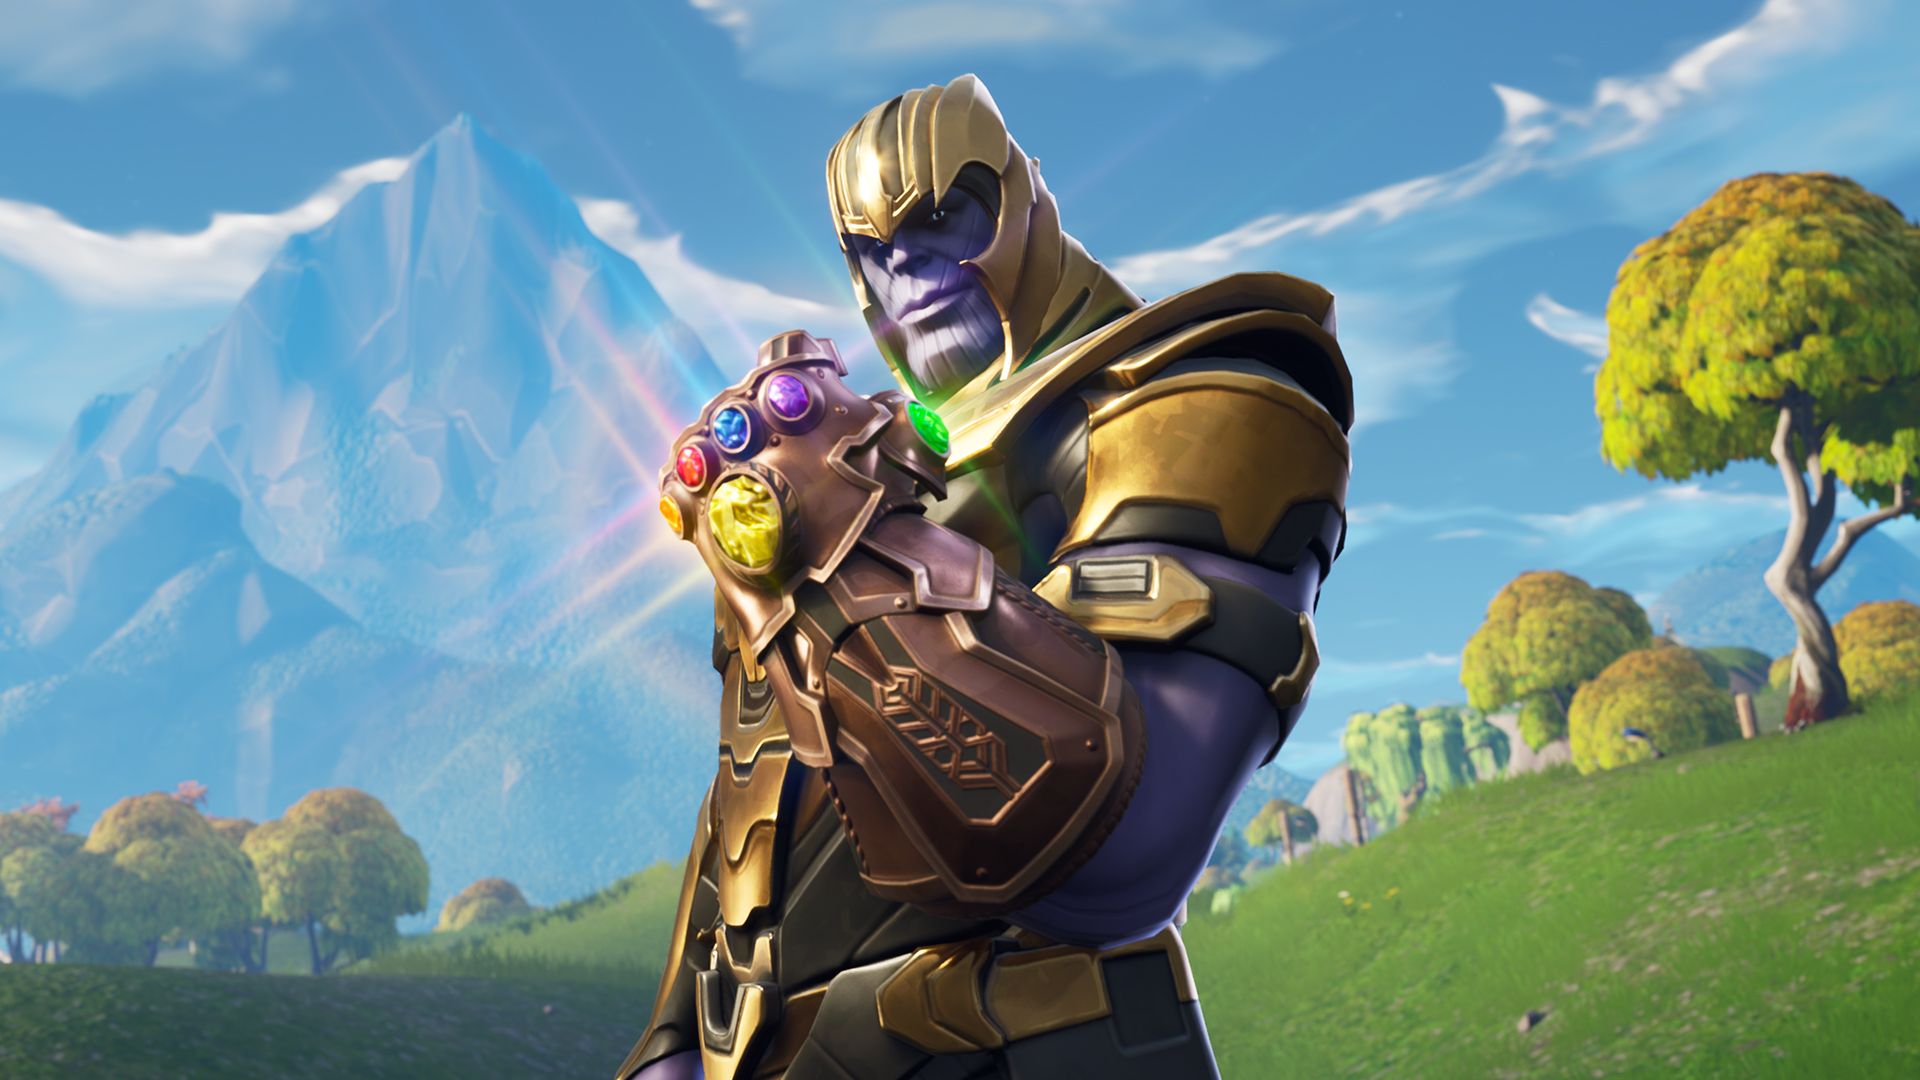 Fortnite Thanos event begins next week with new rewards